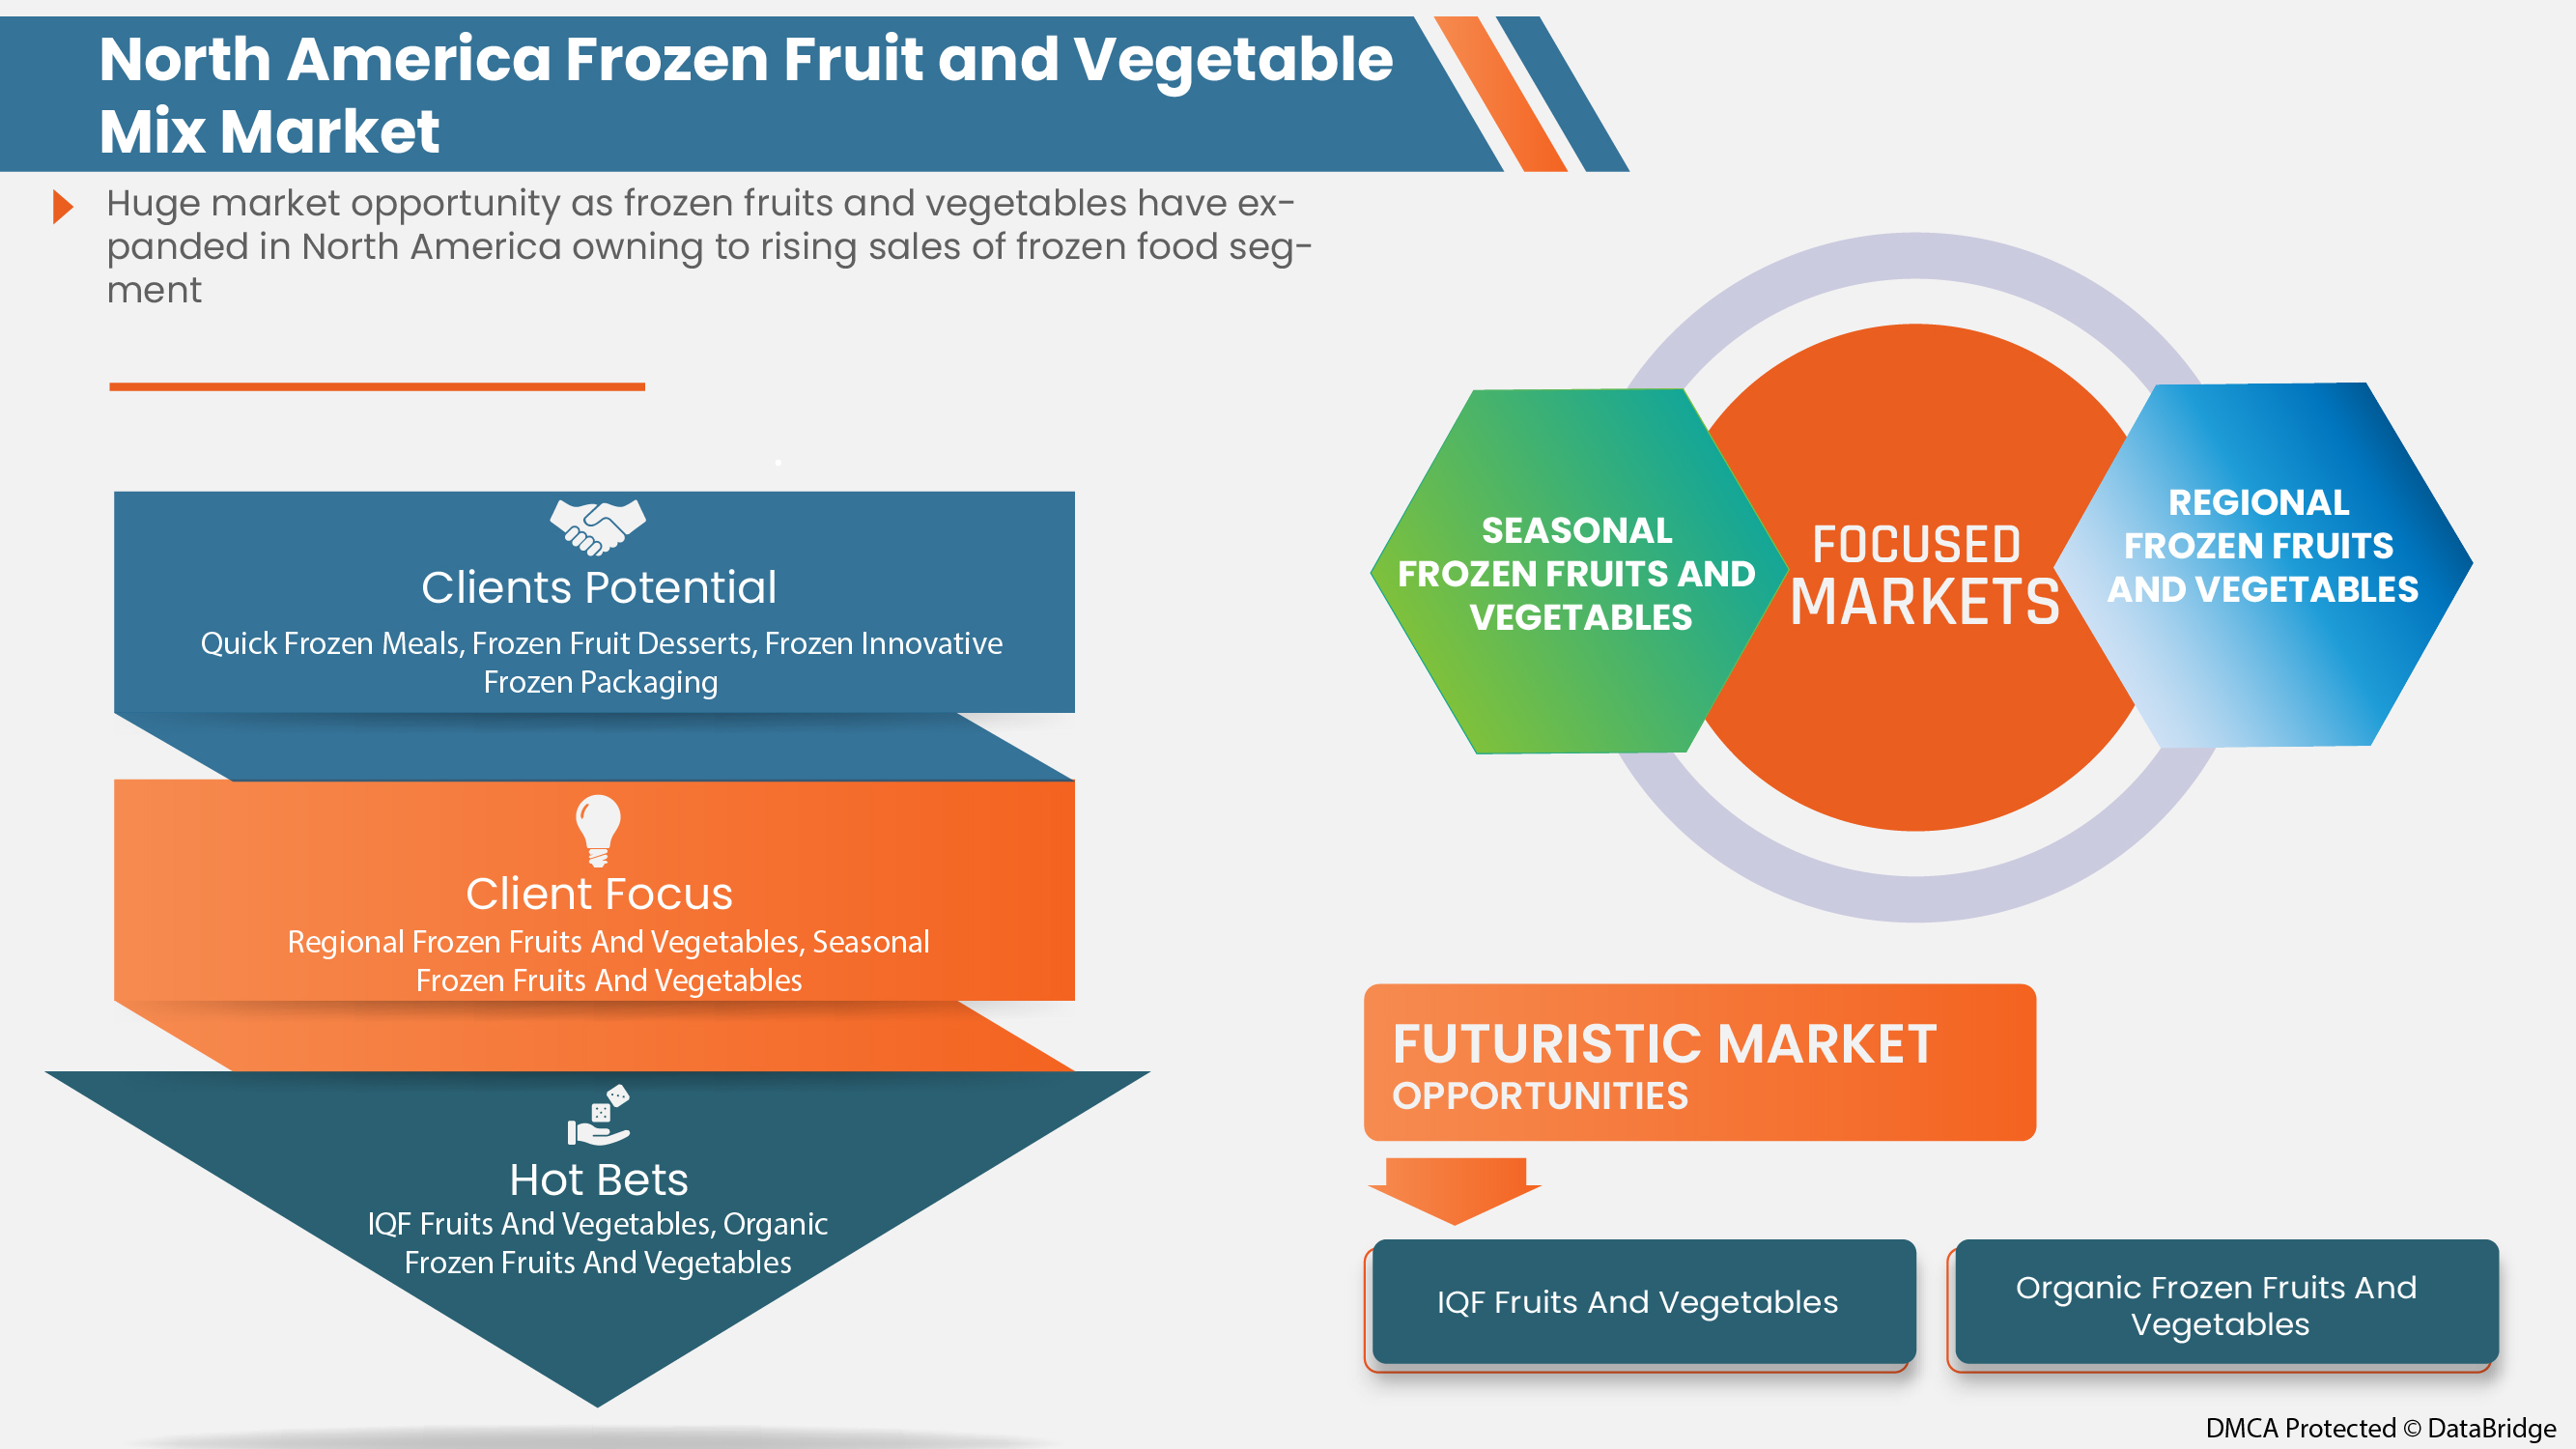 Frozen Fruit and Vegetable Mix Market